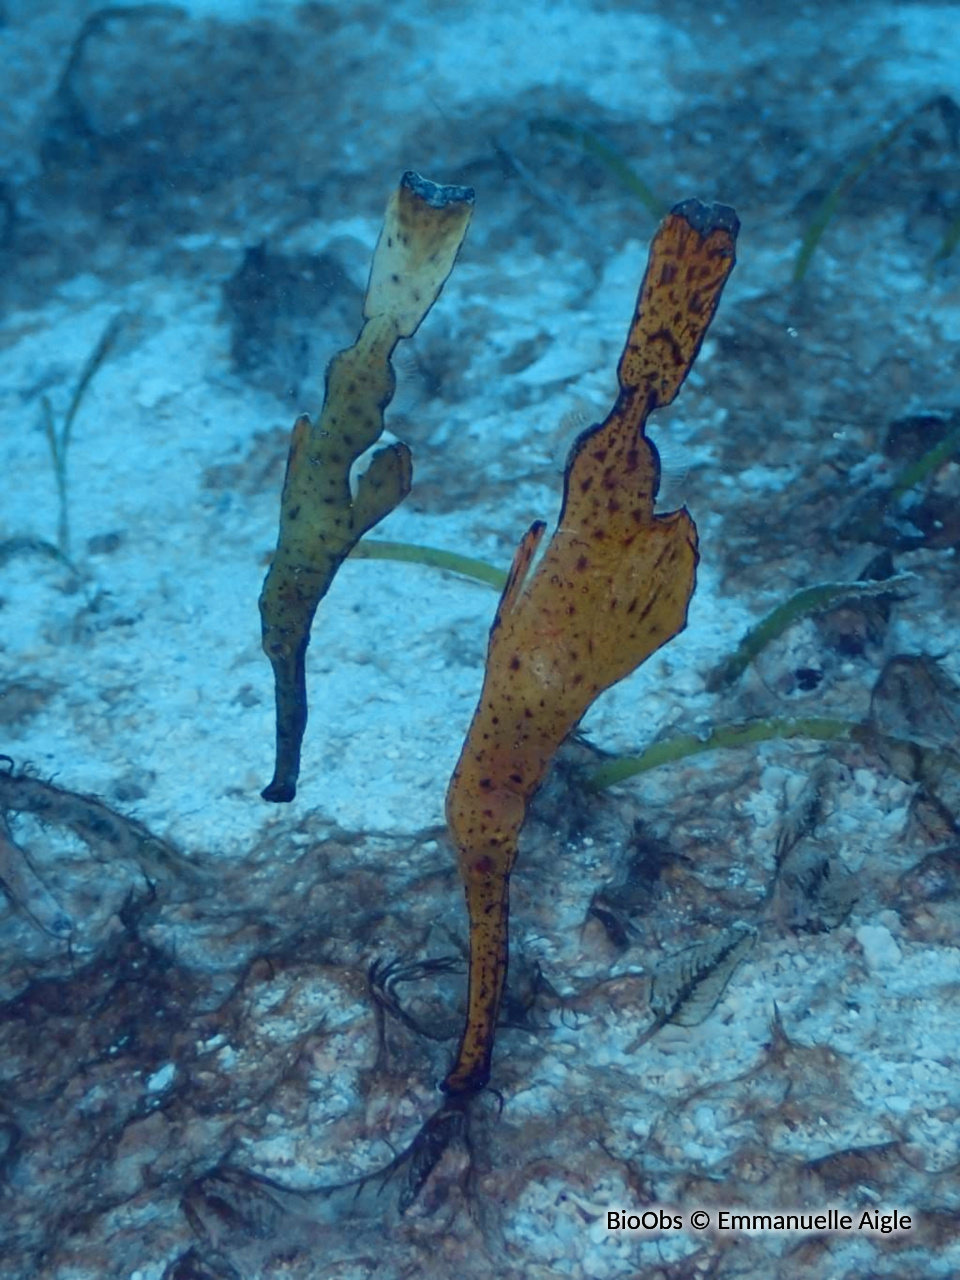 Poisson-fantôme robuste - Solenostomus cyanopterus - Emmanuelle Aigle - BioObs